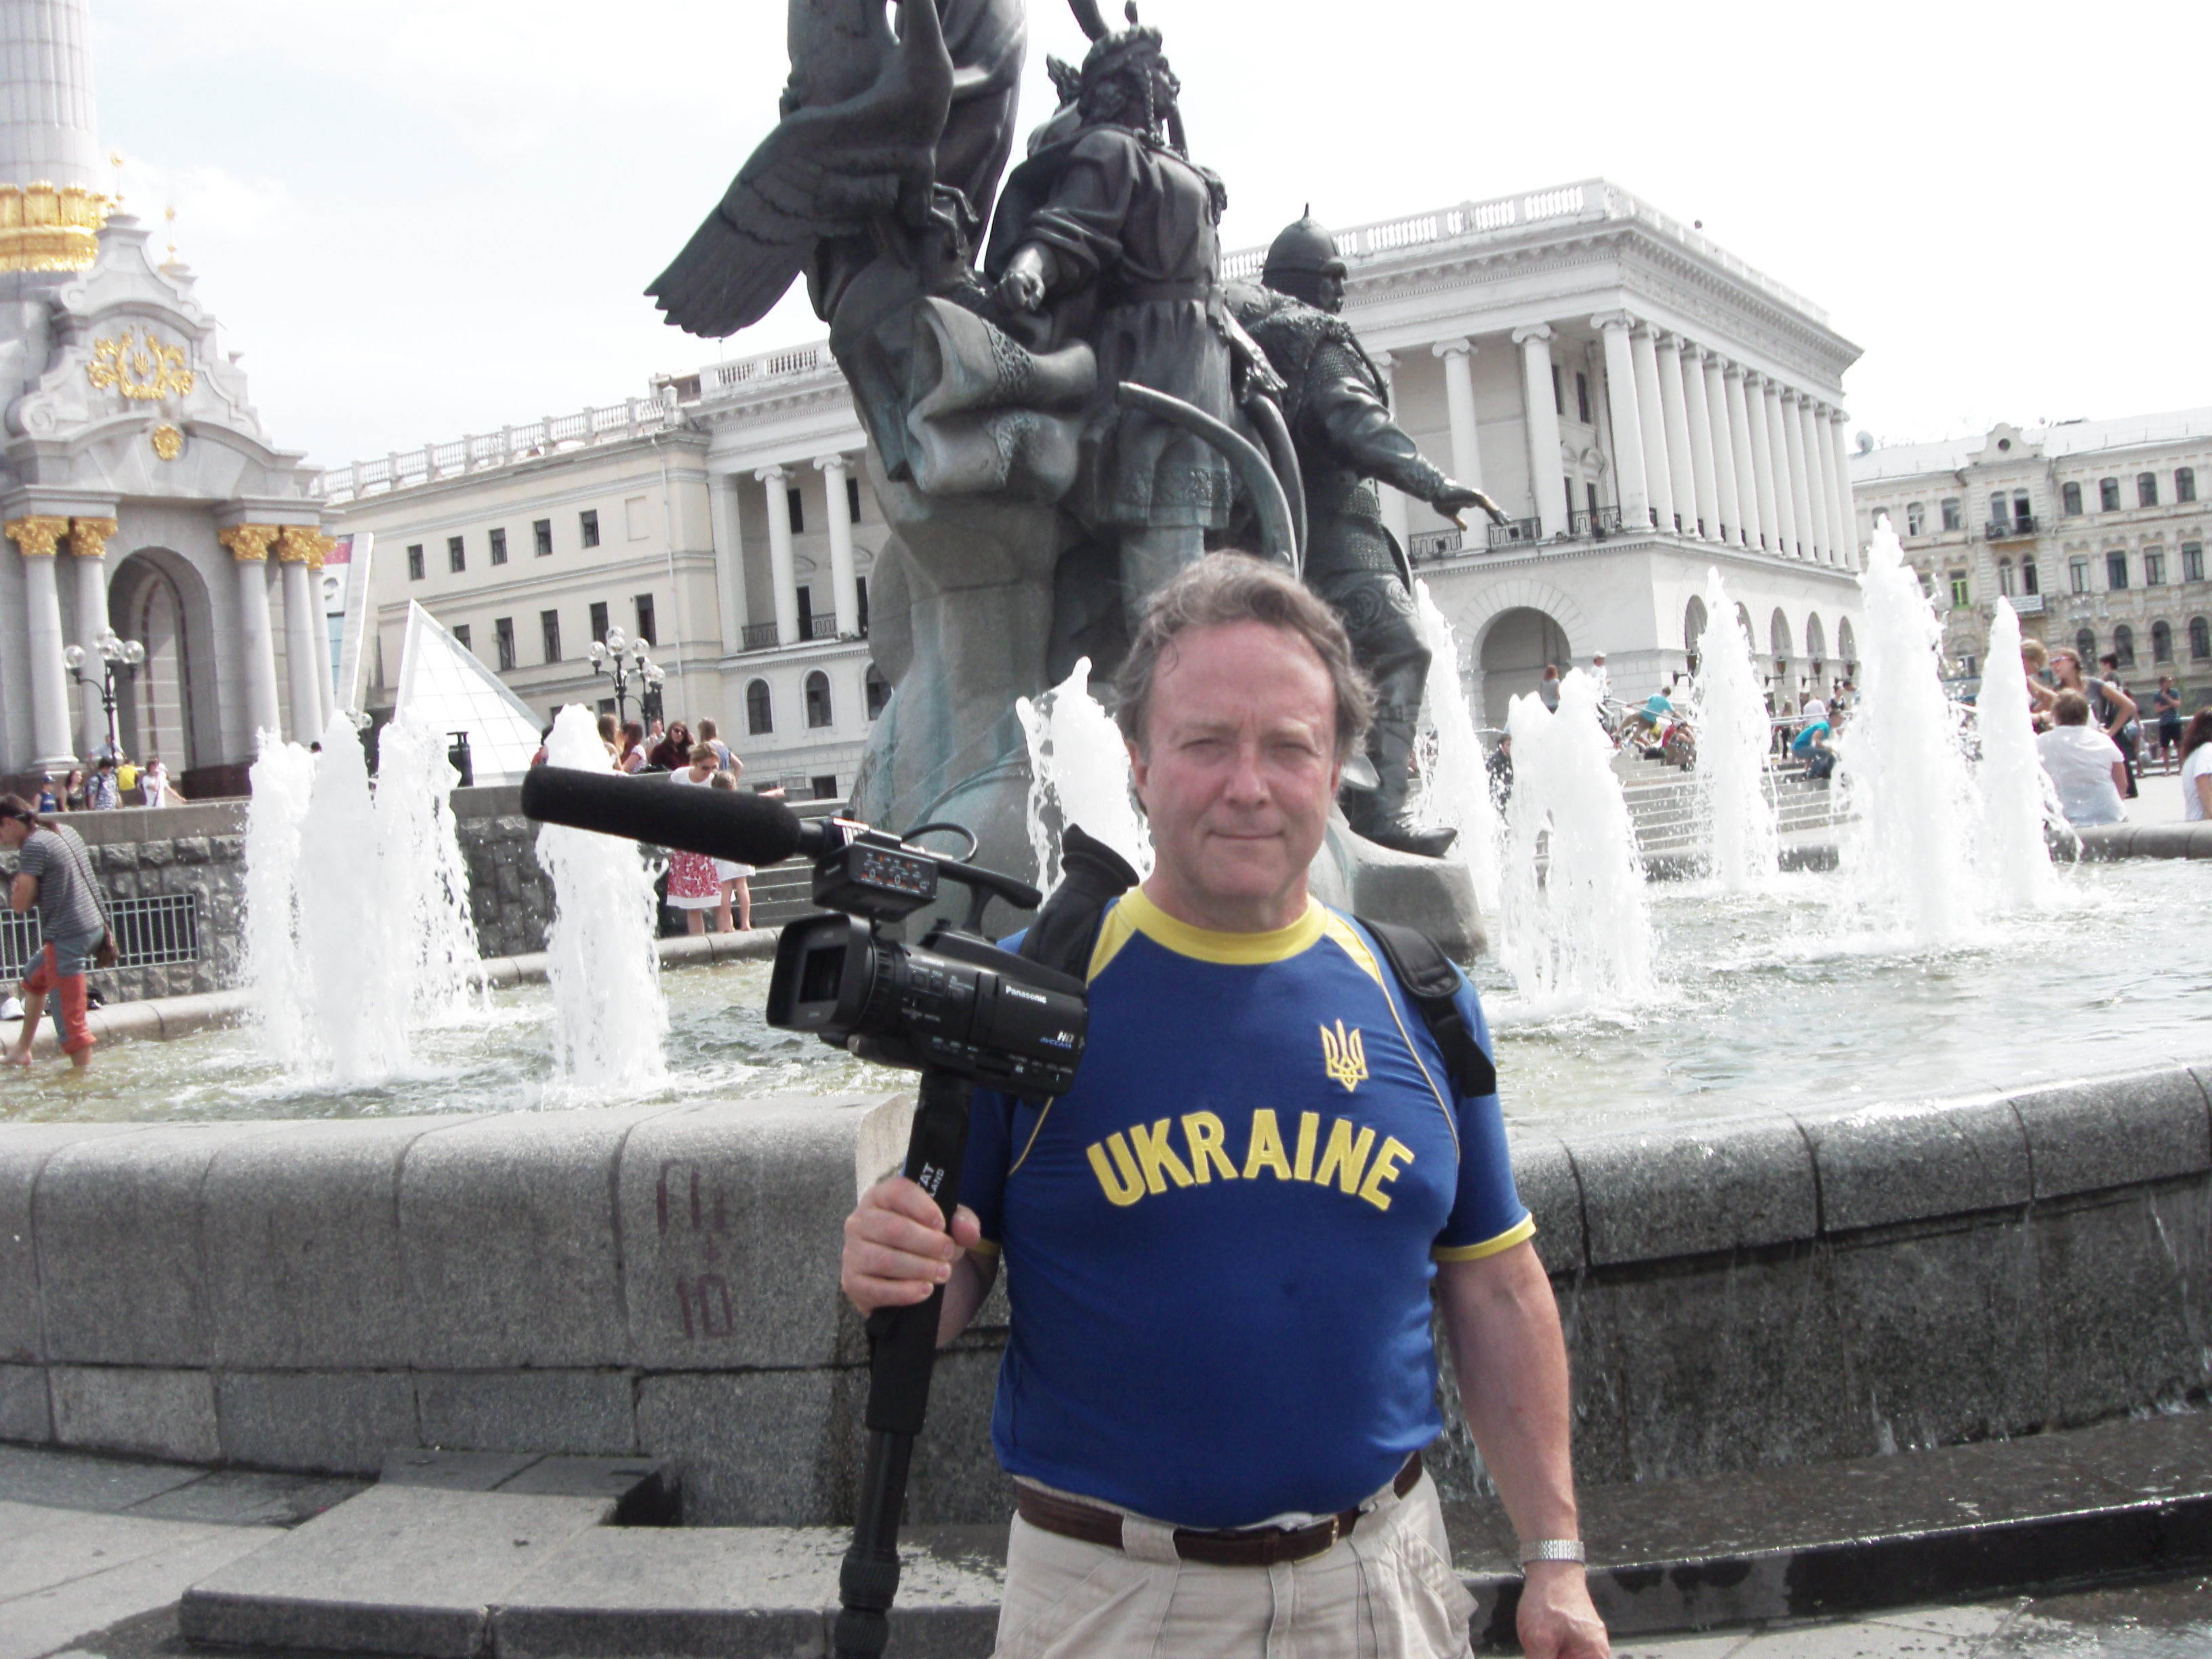 On location in Kiev, Ukraine